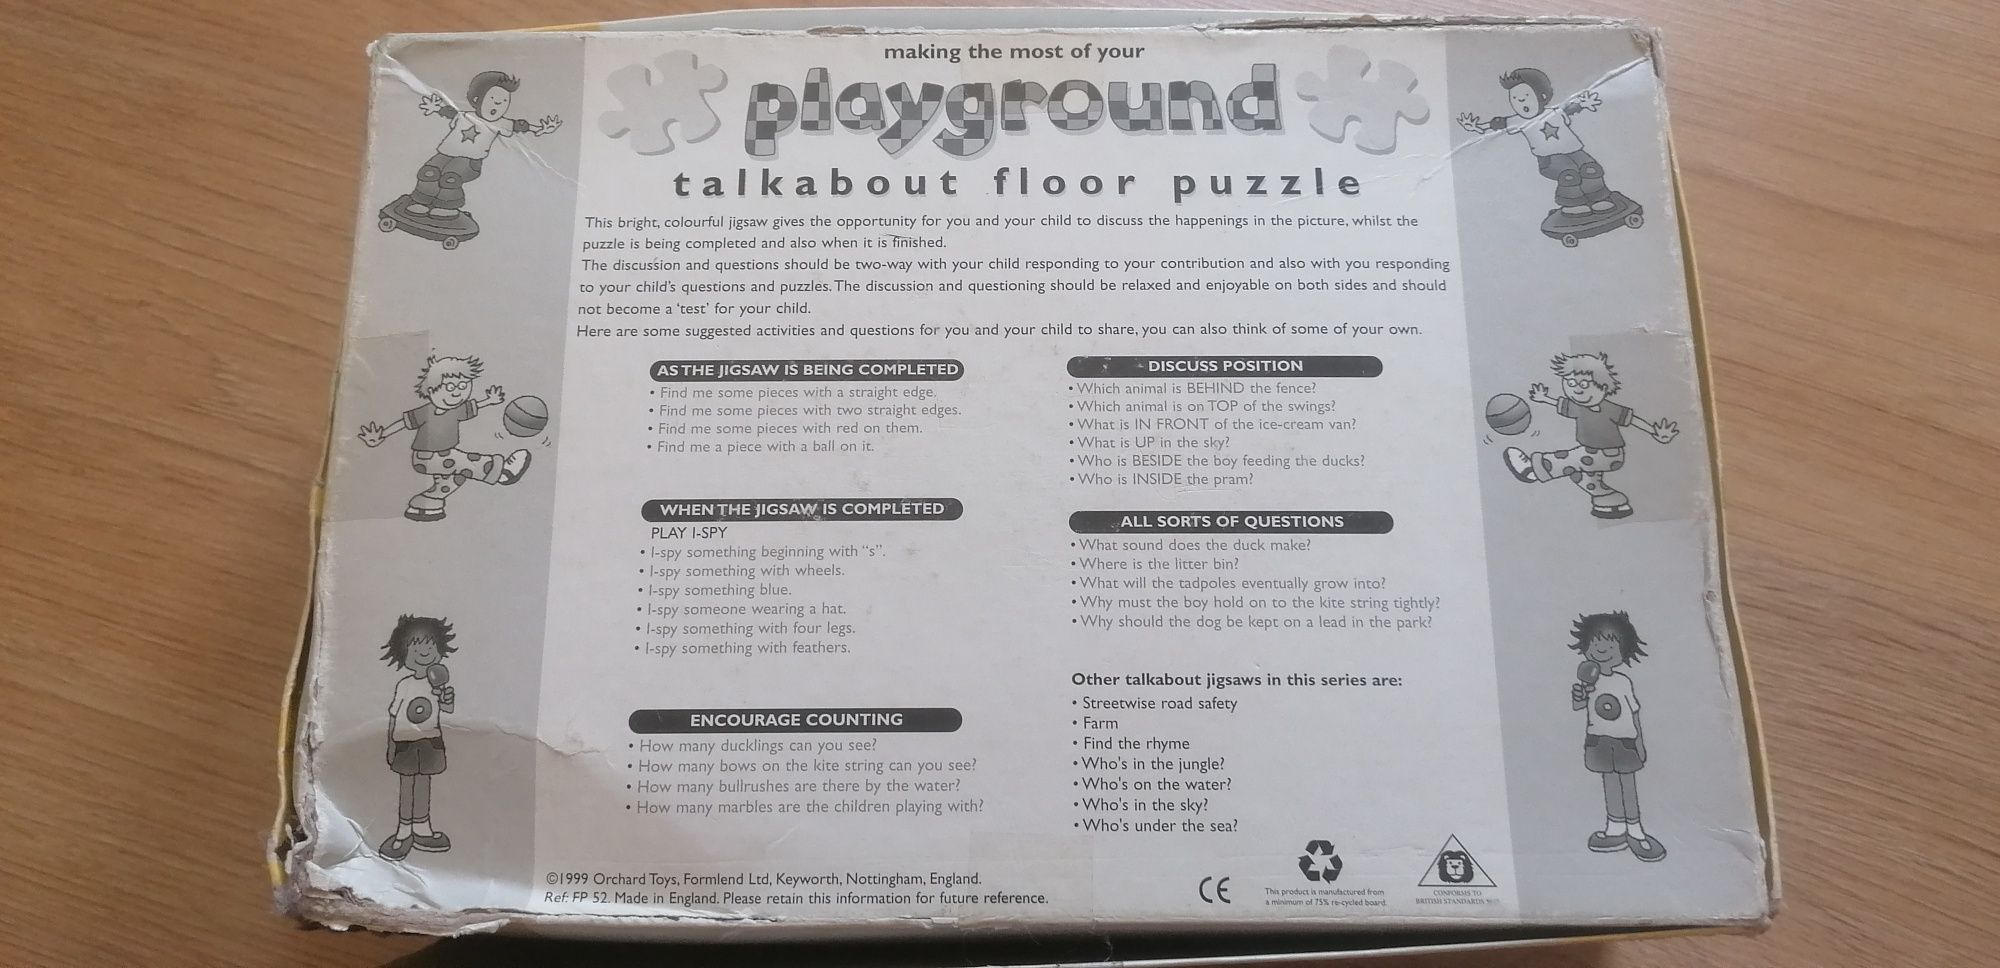 4 Puzzle-uri de podea / Floor puzzle